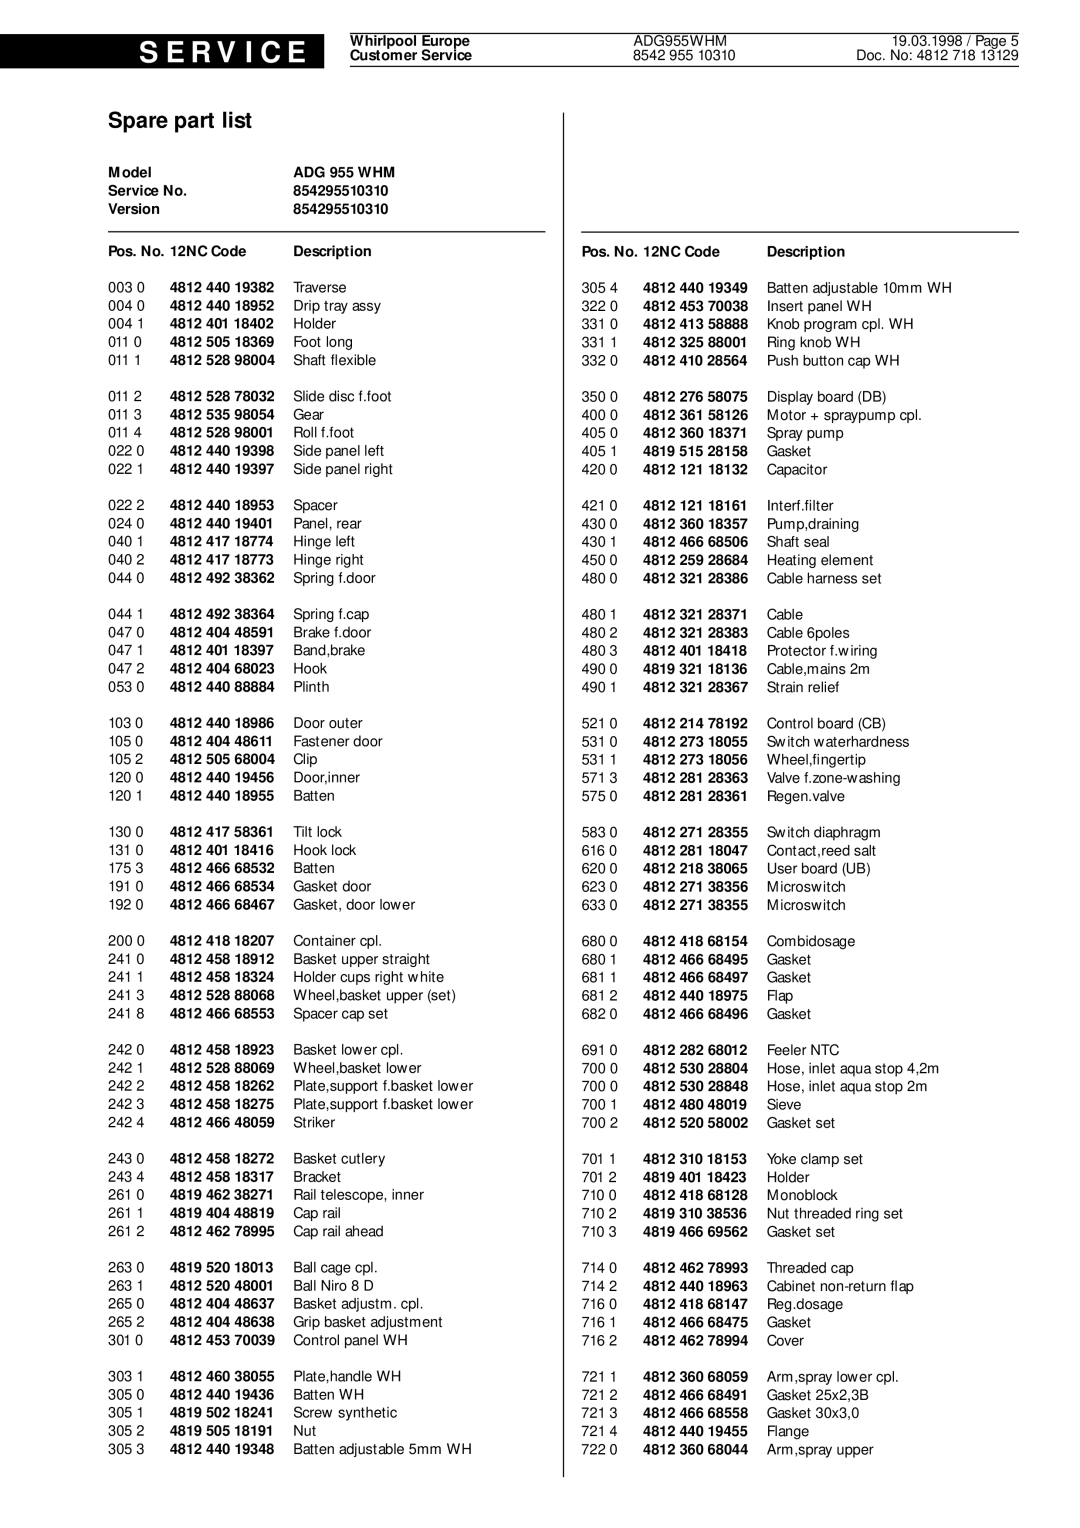 Whirlpool ADG 955 WHM service manual Spare part list, S E R V I C E 